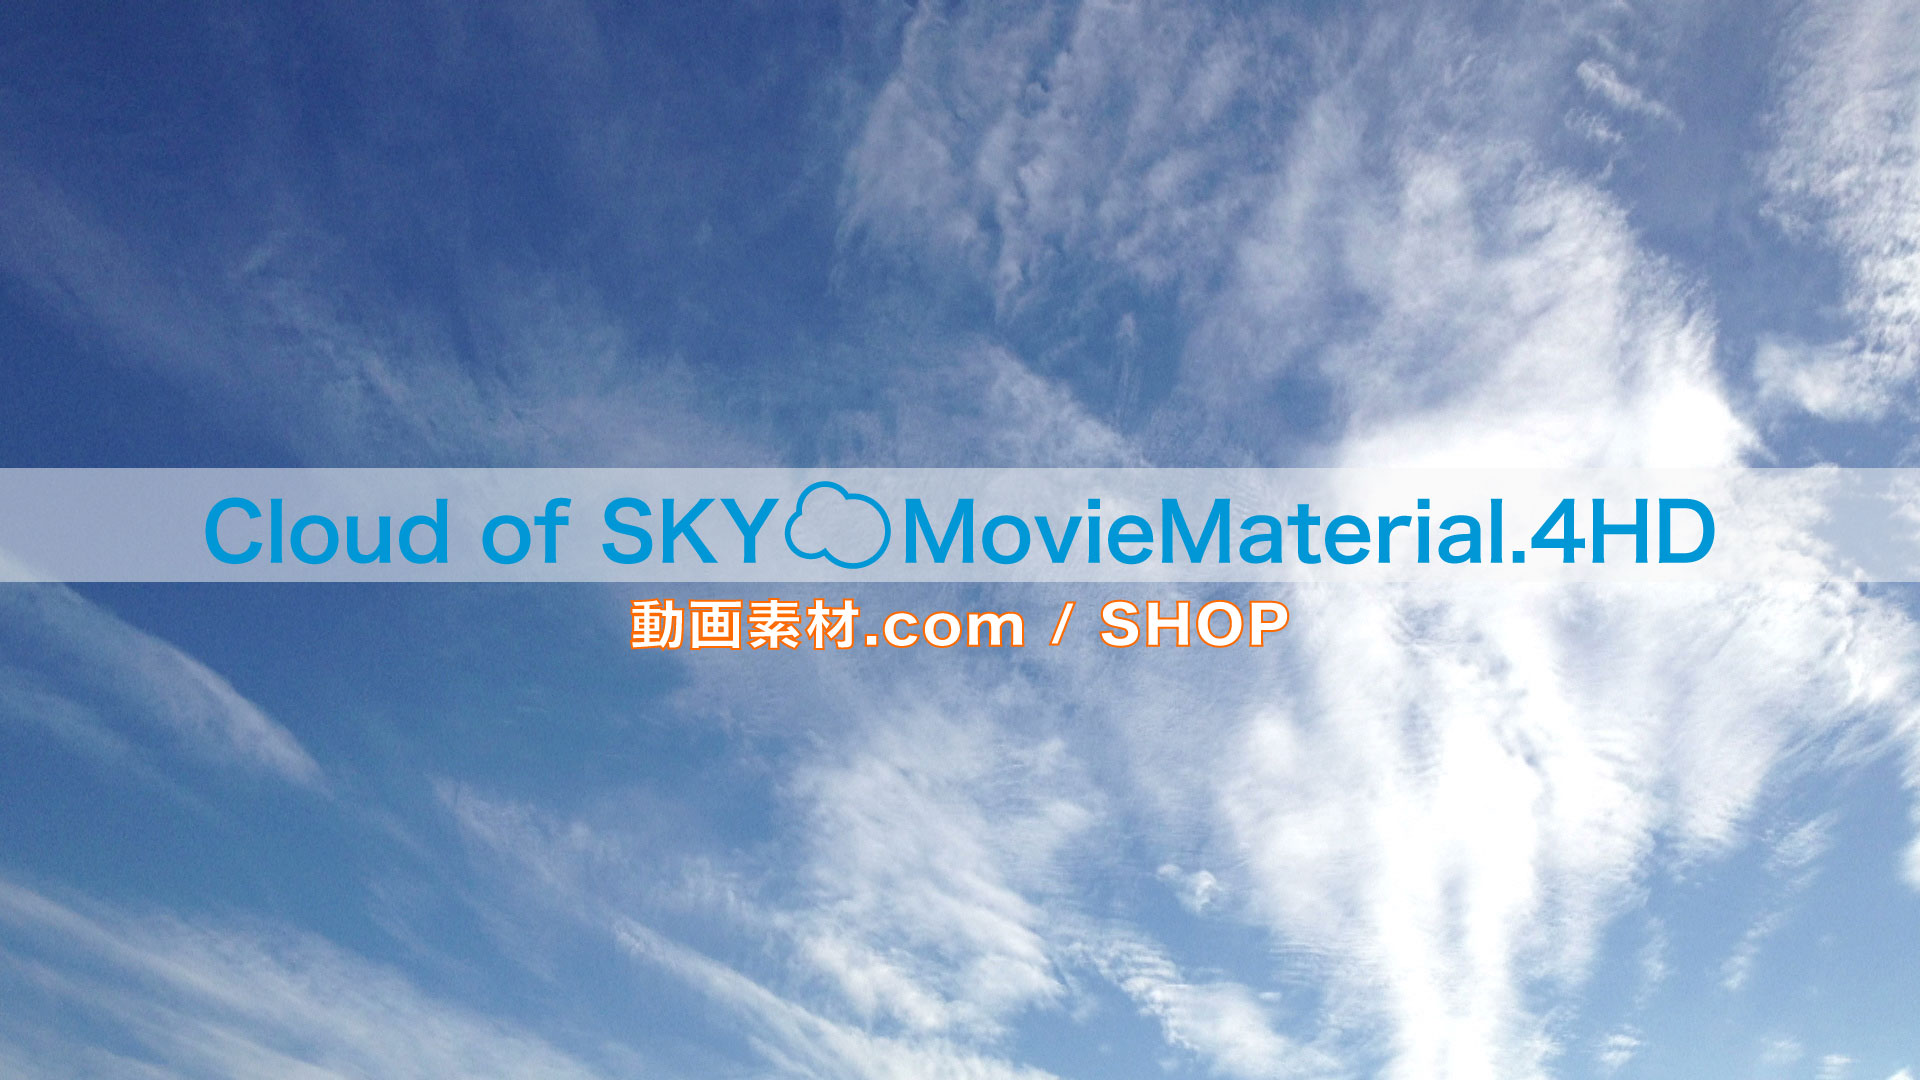 【Cloud of SKY MovieMaterial.4HD】ロイヤリティフリー フルハイビジョン空と雲の動画素材集 Image.7